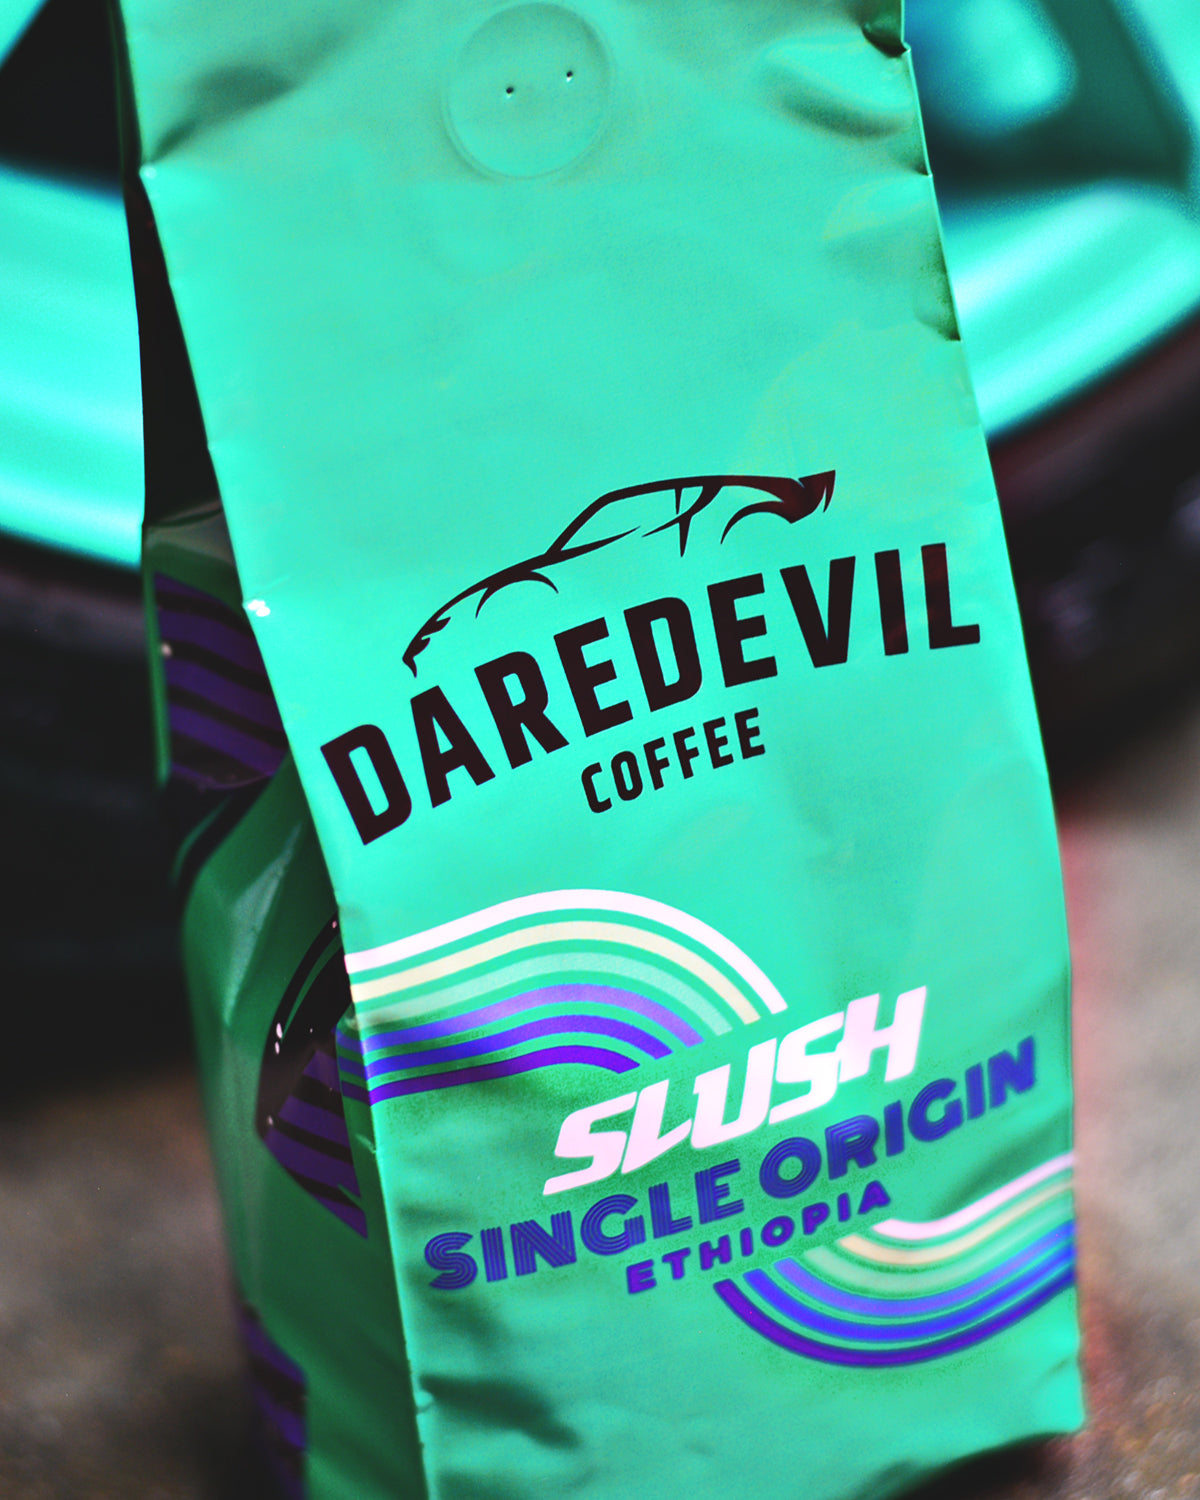 Daredevil Coffee Single Origin: Ethiopian Bag 12oz